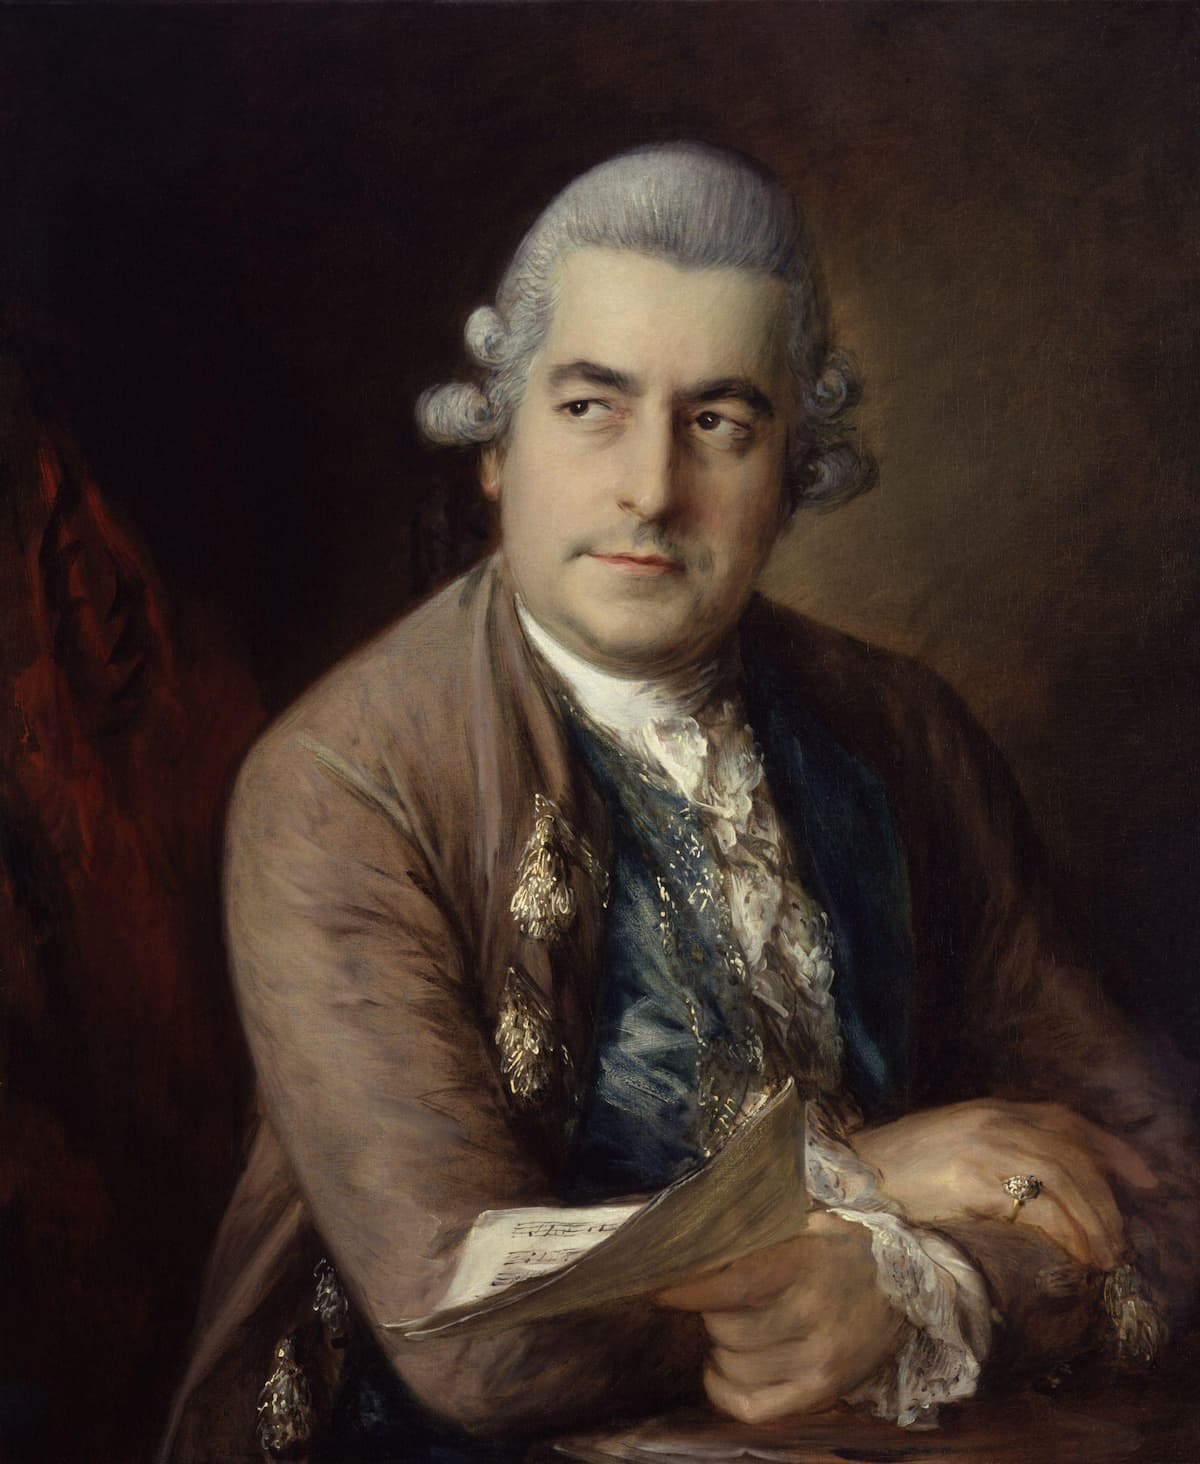 Portrait of Johann Christian Bach (1735-1782) in 1776 by Thomas Gainsborough